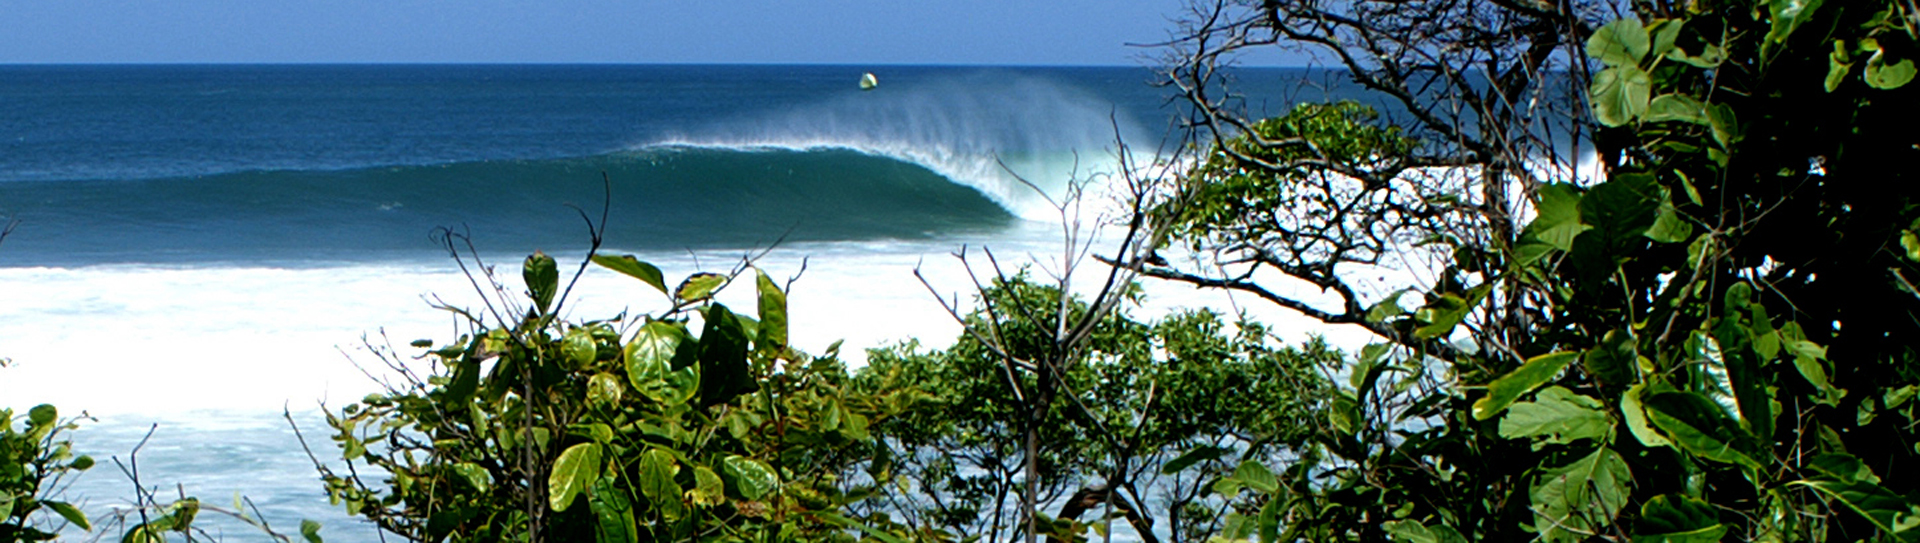 surf report costa rica